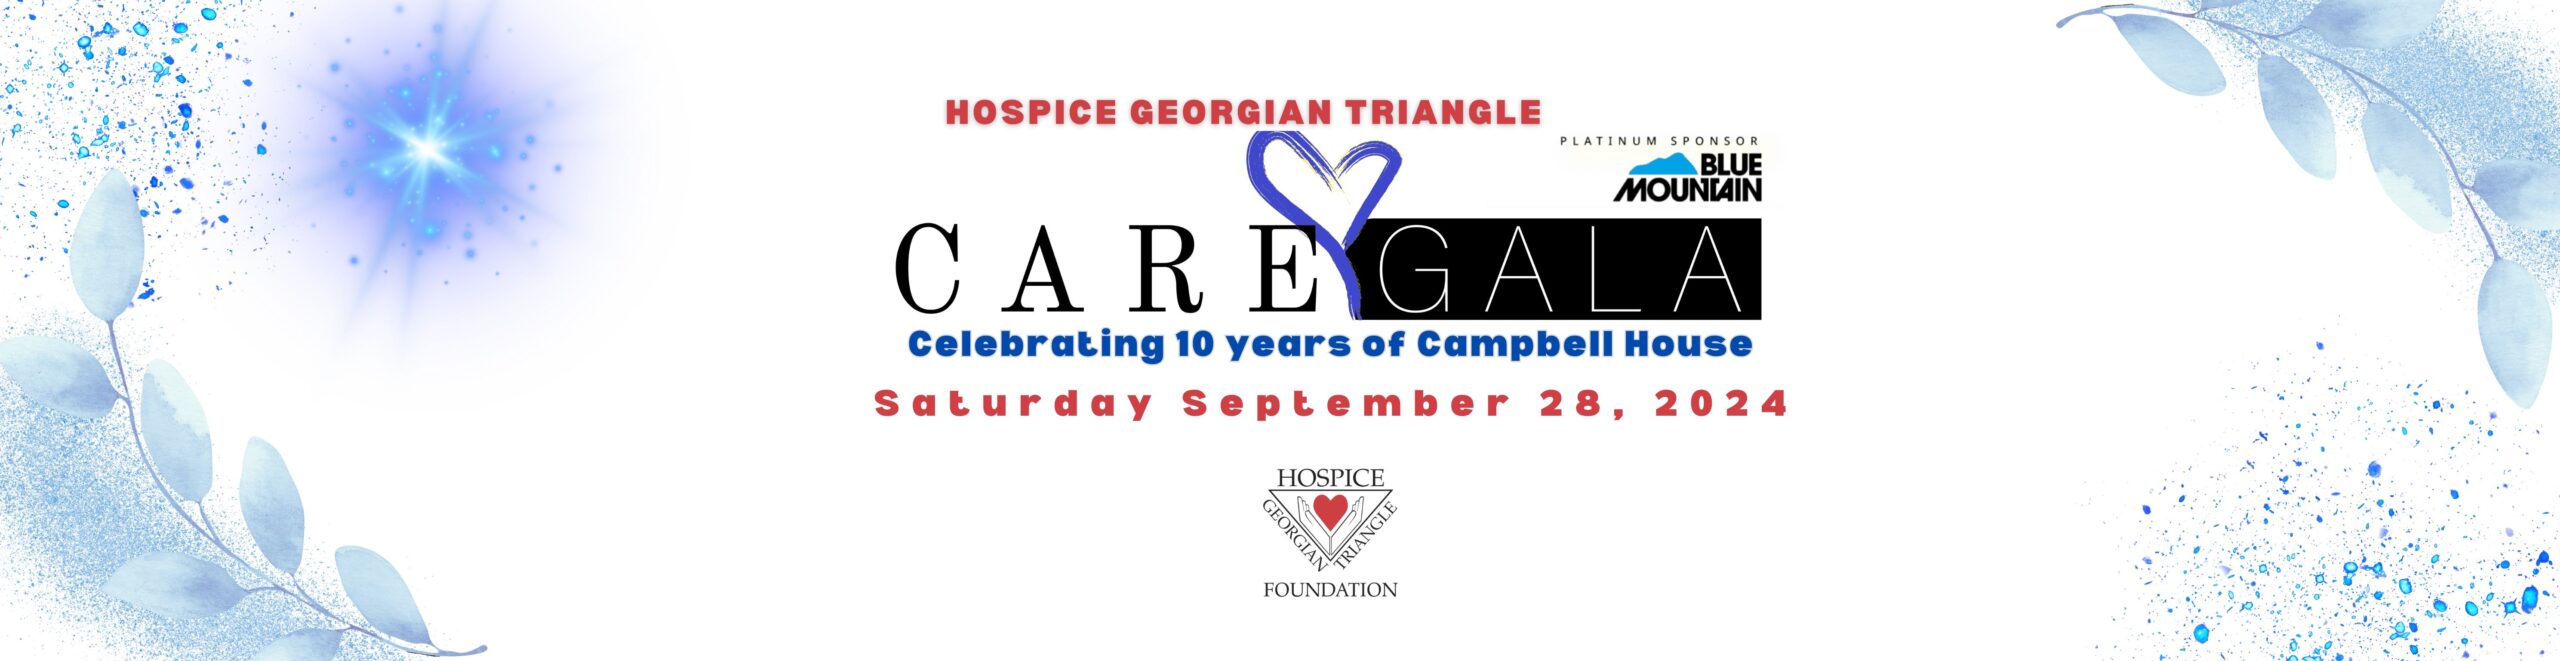 Care Gala Banner Hospice Georgian Triangle (72 x 26 in) (62 x 16 in) (1)